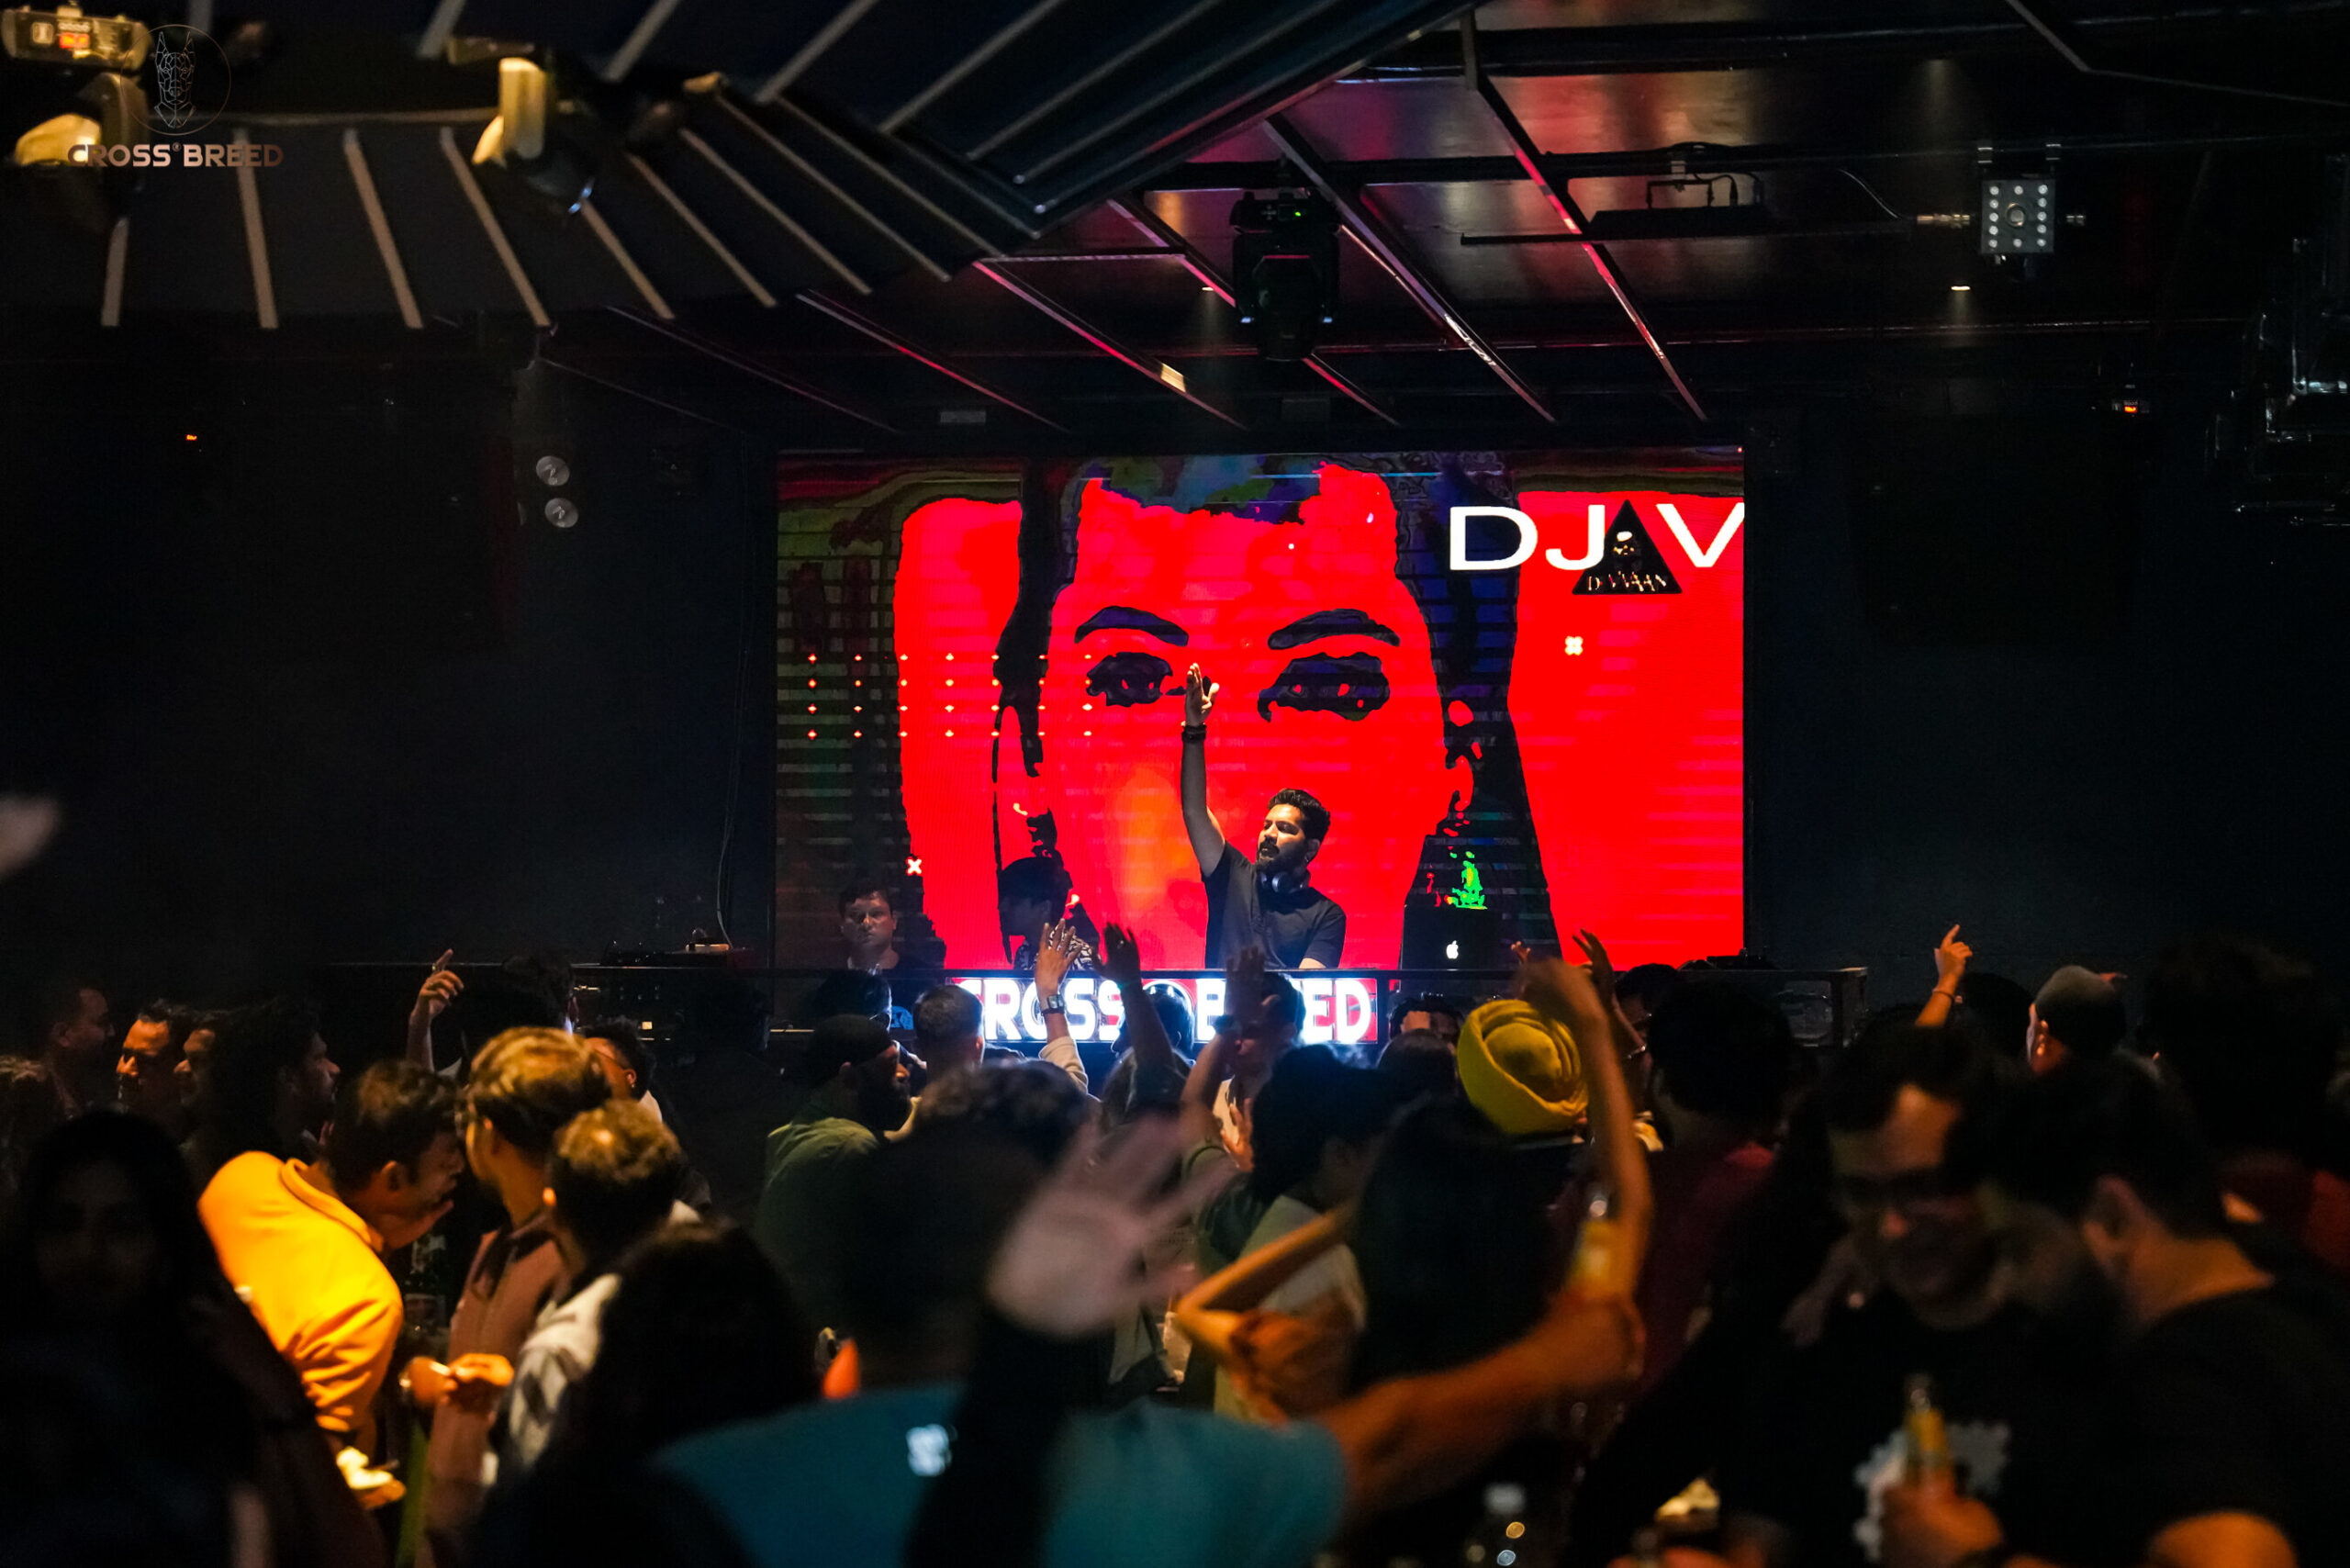 DJ Vvaan performance at crossbreed club hyderabad